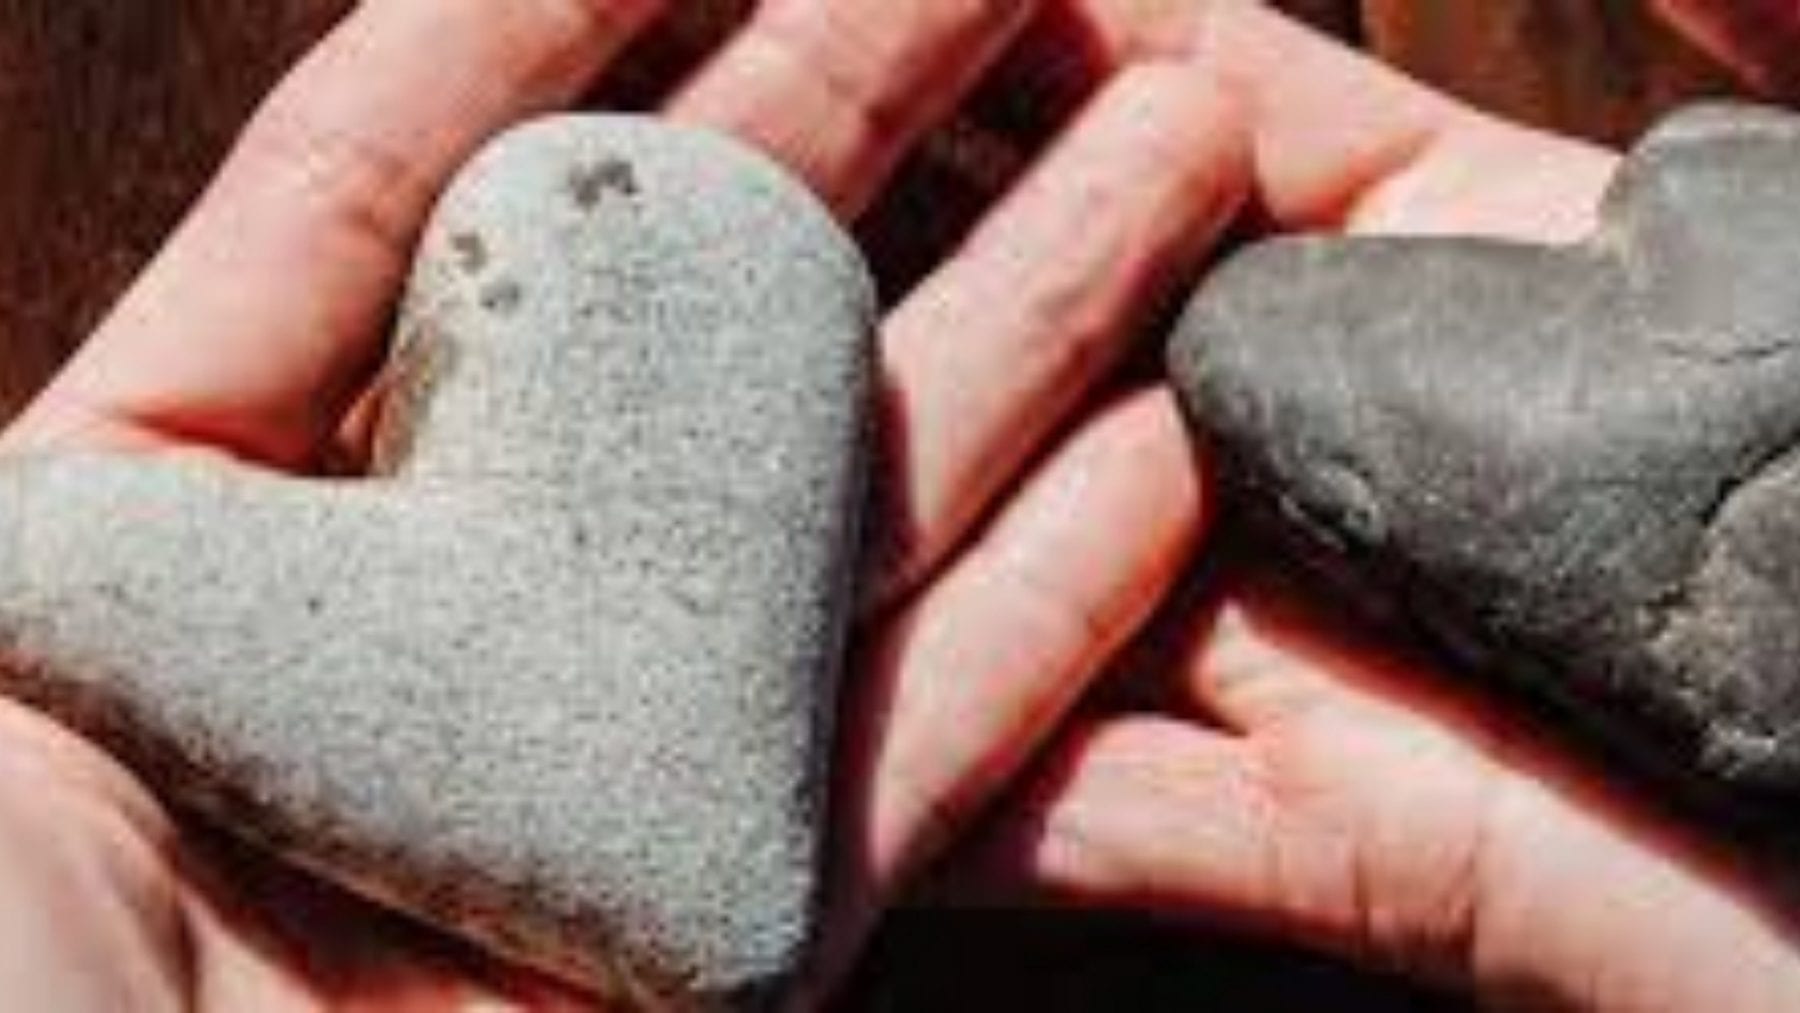 A hand holding a heart shaped rock.